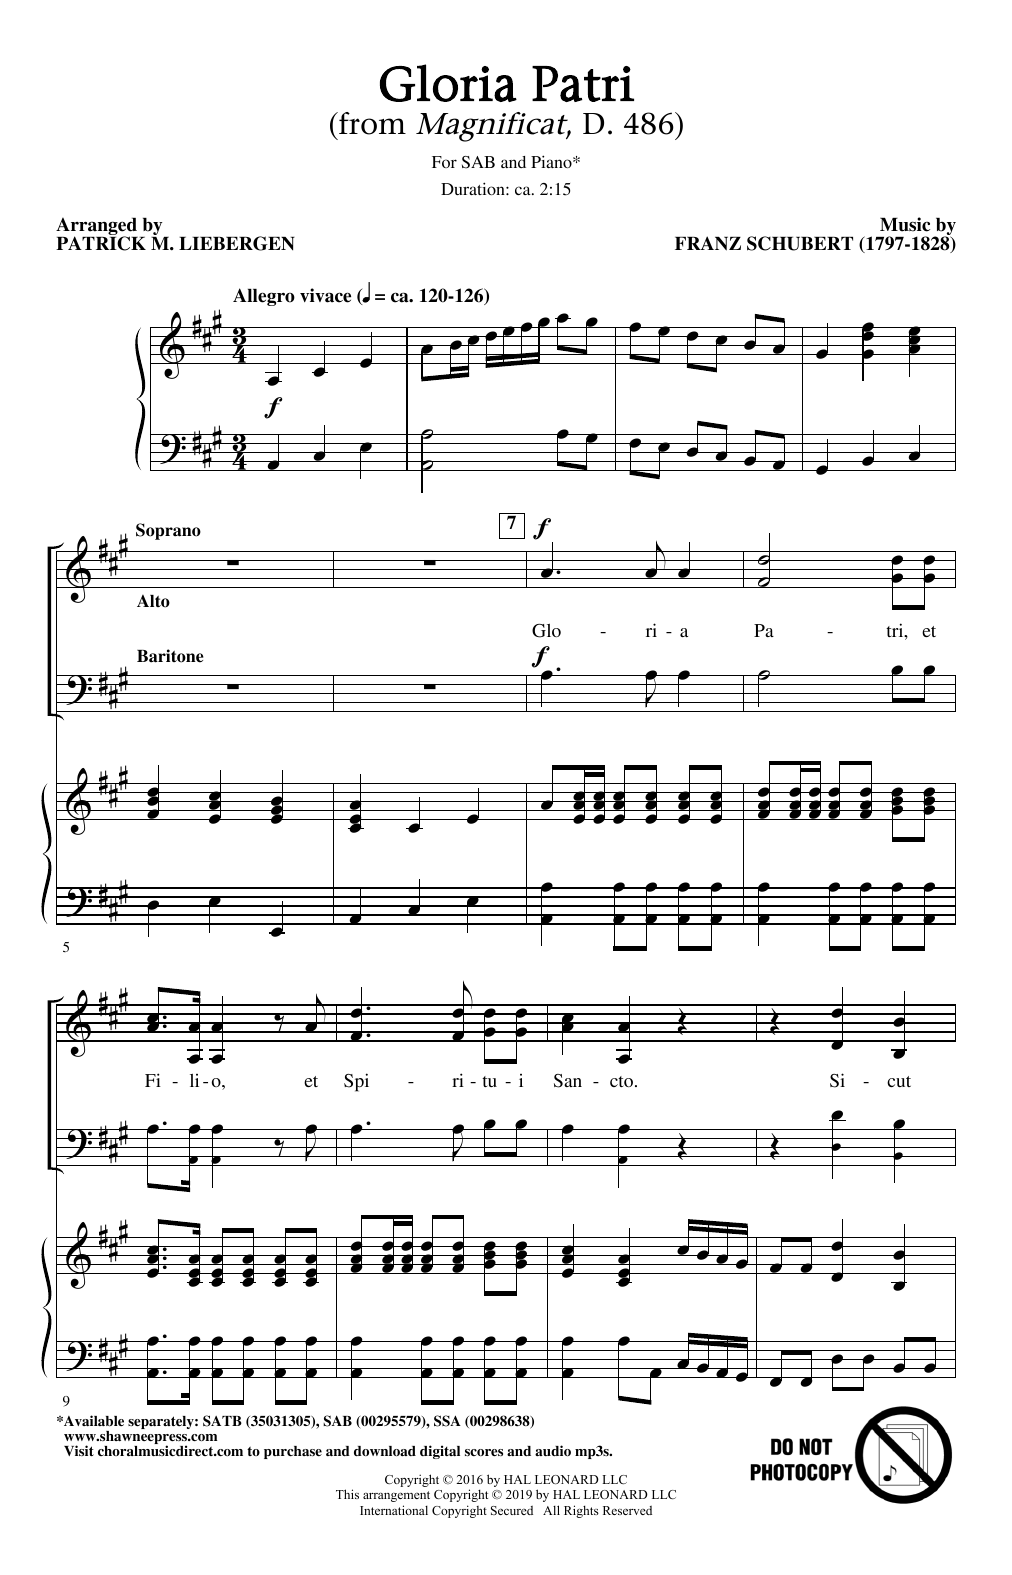 Franz Schubert Gloria Patri (from Magnificat, D. 486) (arr. Patrick M. Liebergen) Sheet Music Notes & Chords for SAB Choir - Download or Print PDF